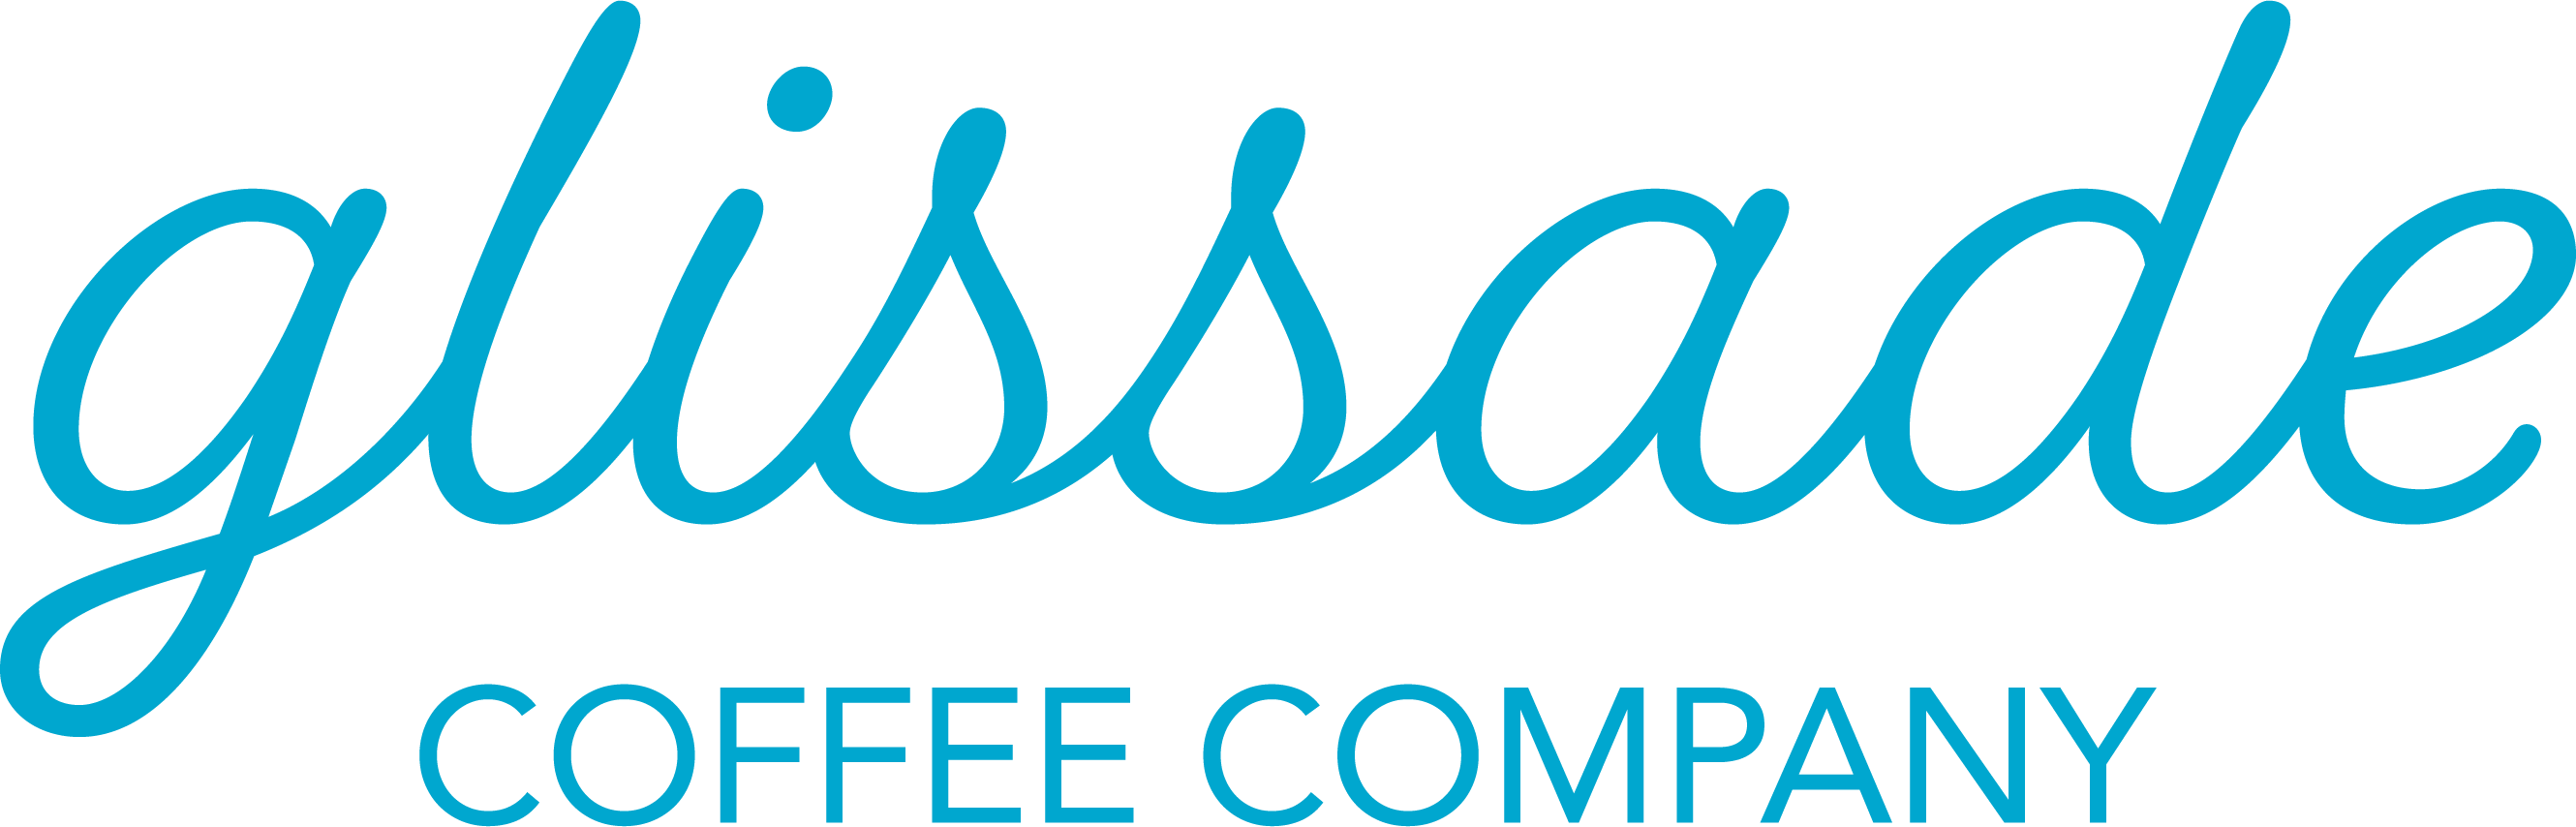 Glissade Coffee Company